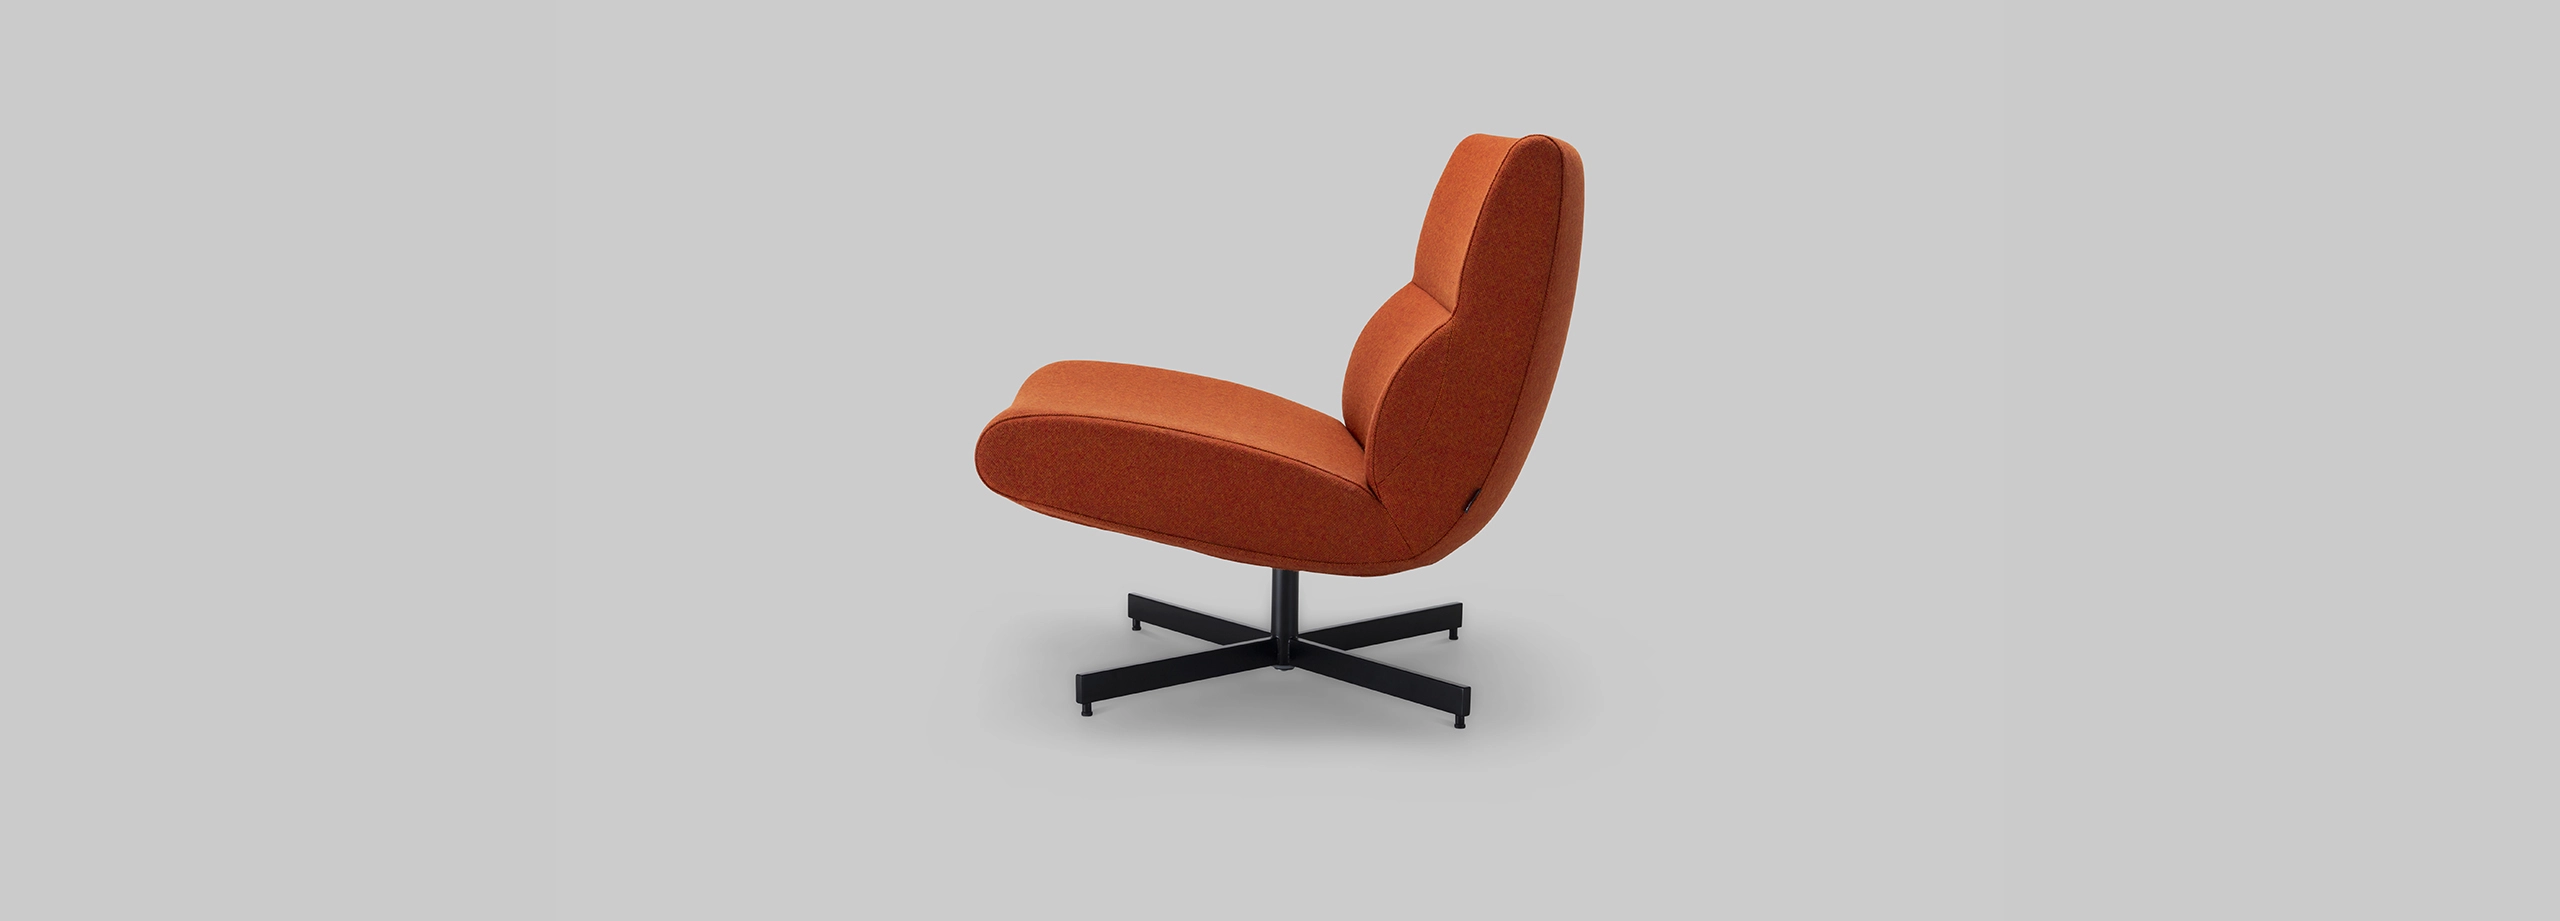 Harvink Focus fauteuil richwool oranjerood